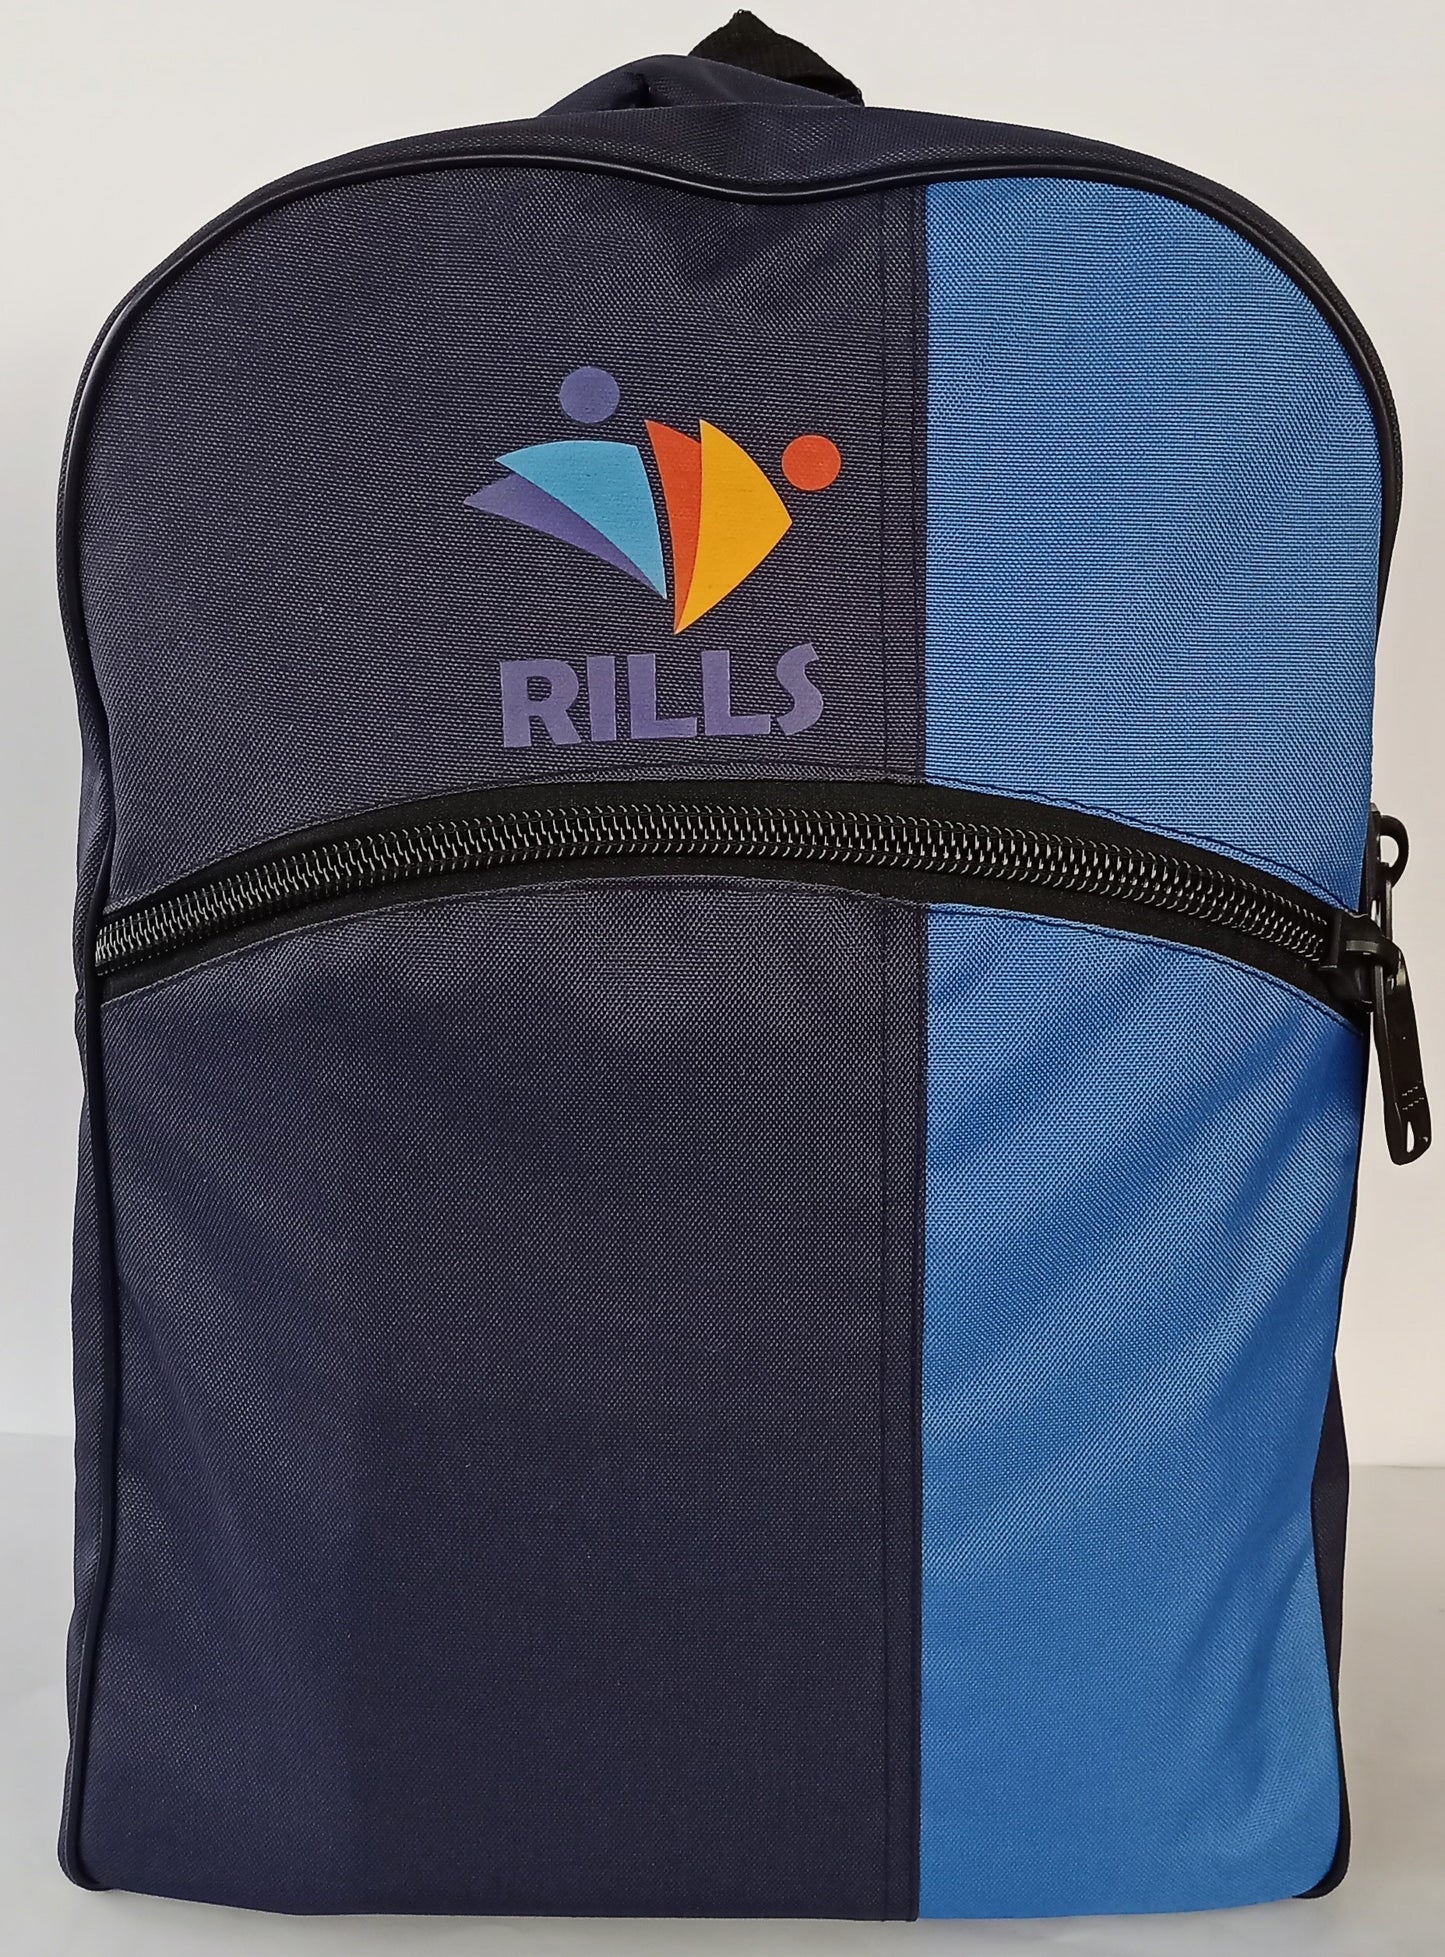 RILLS School Bag - Backpack